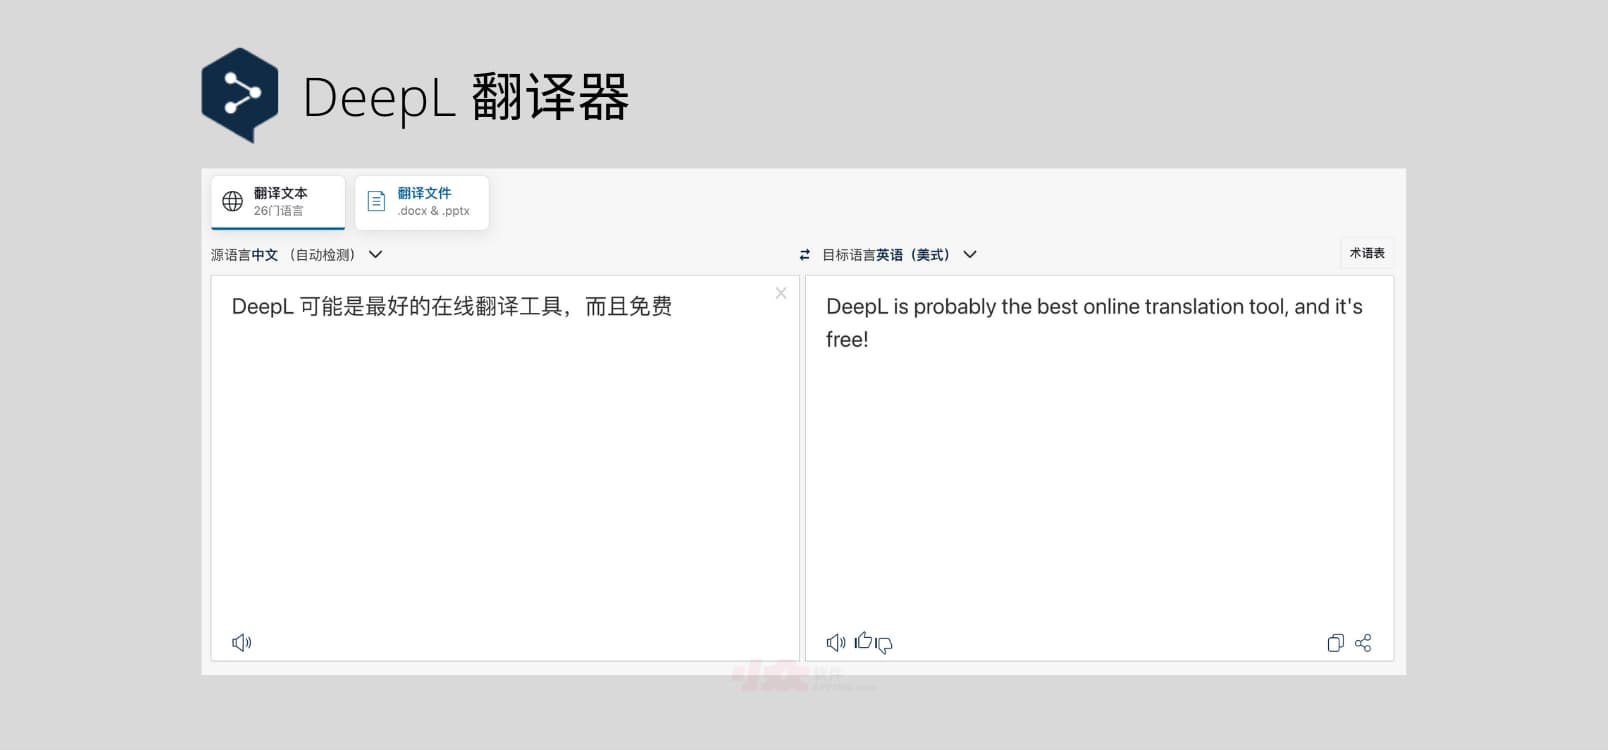 DeepL 发布 iPhone 客户端，可能是最好的在线翻译工具